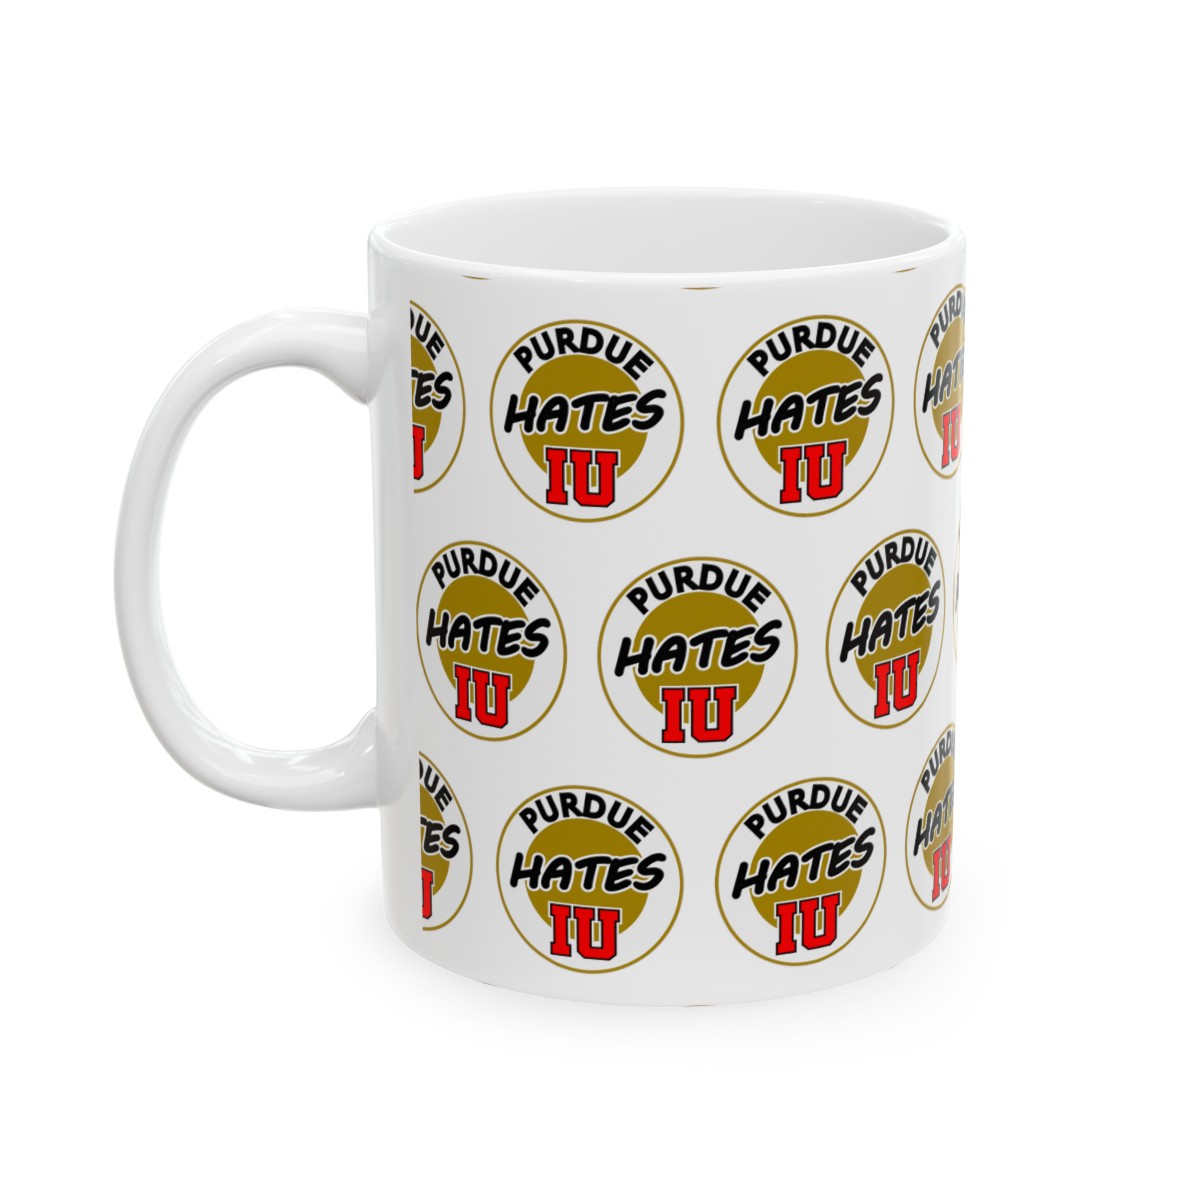 Purdue Hates IU Coffee Mug 11oz product thumbnail image